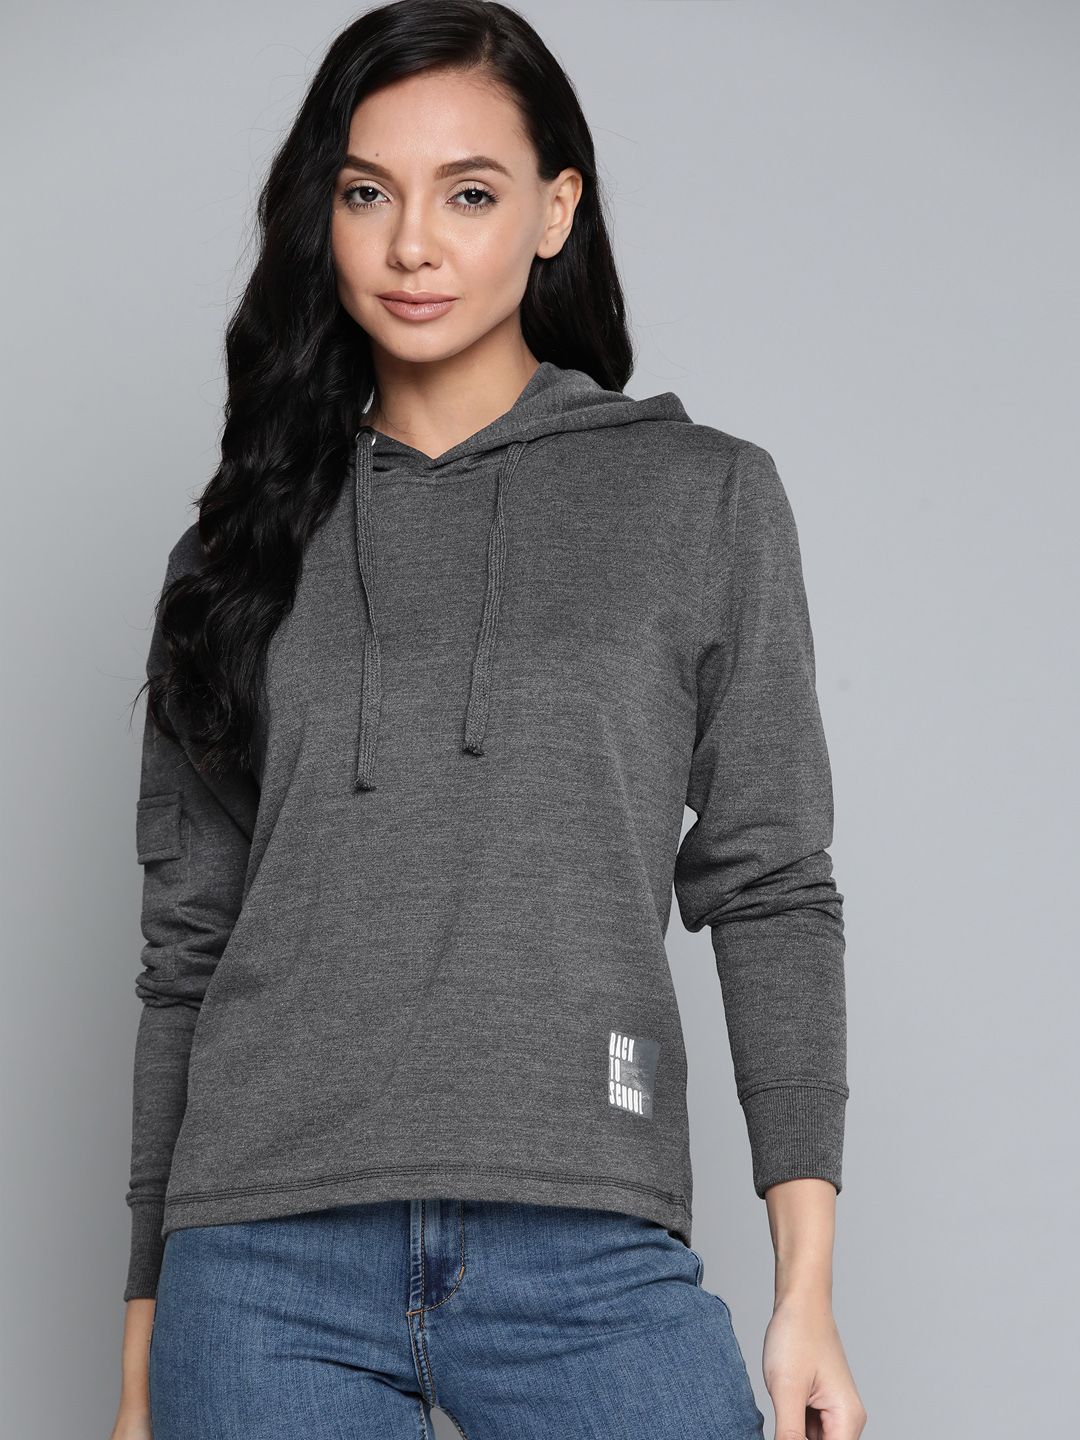 Harvard Women Charcoal Grey Hooded Sweatshirt Price in India